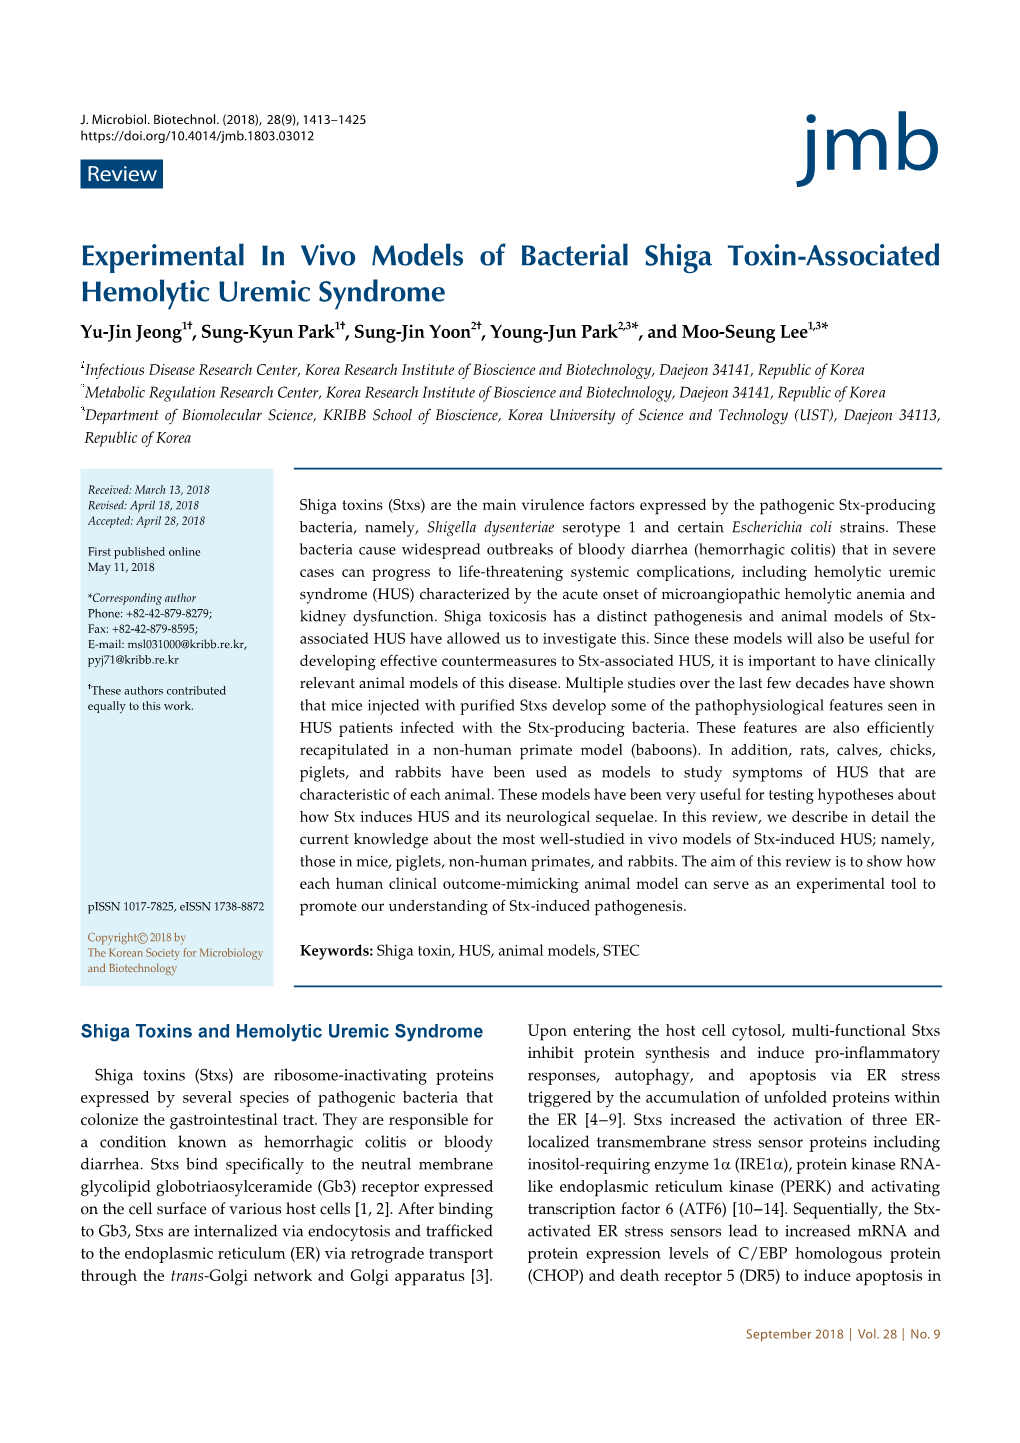 Experimental in Vivo Models of Bacterial Shiga Toxin-Associated